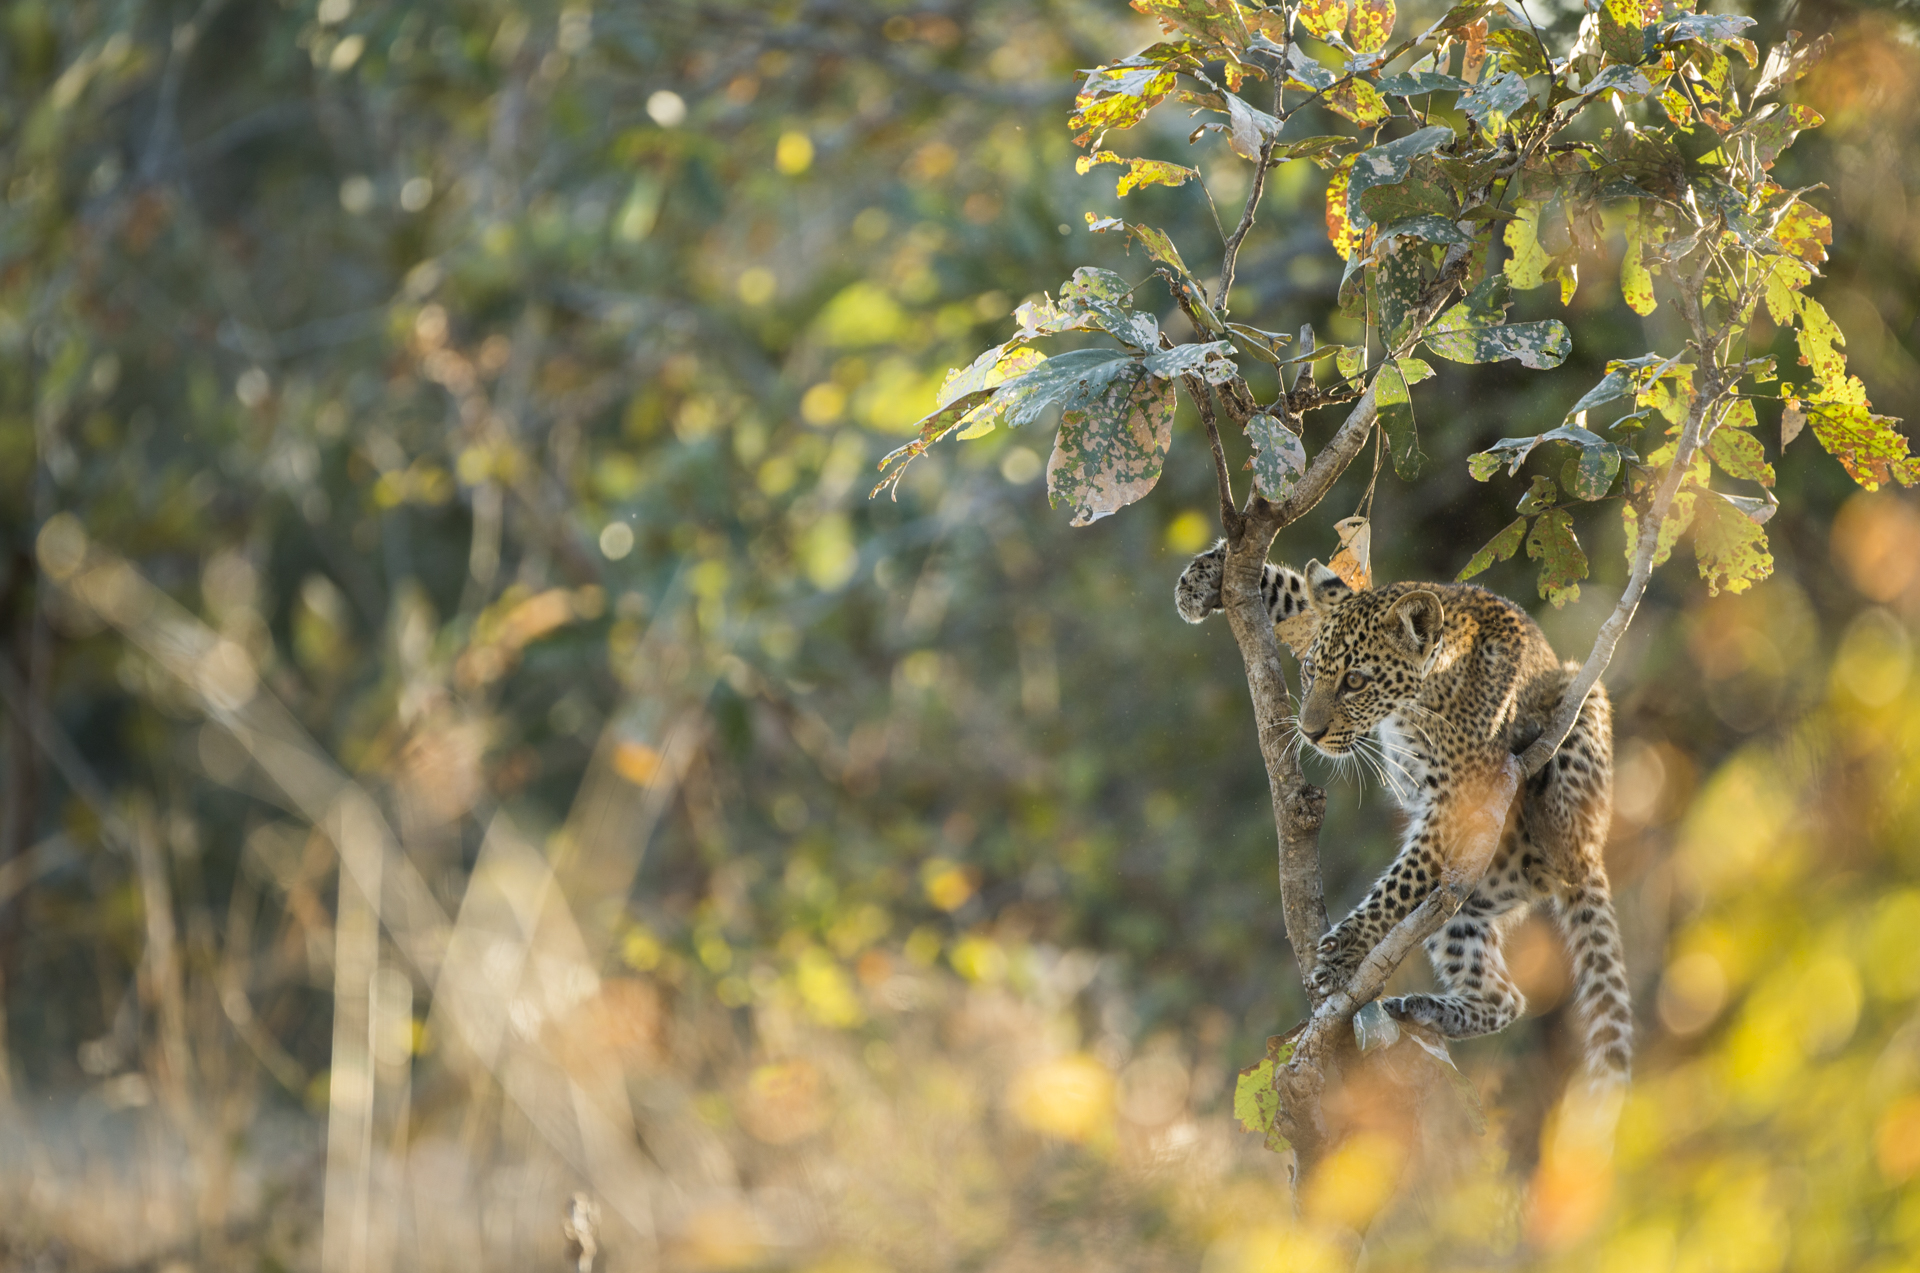  A leopard cub plays in a tree. 